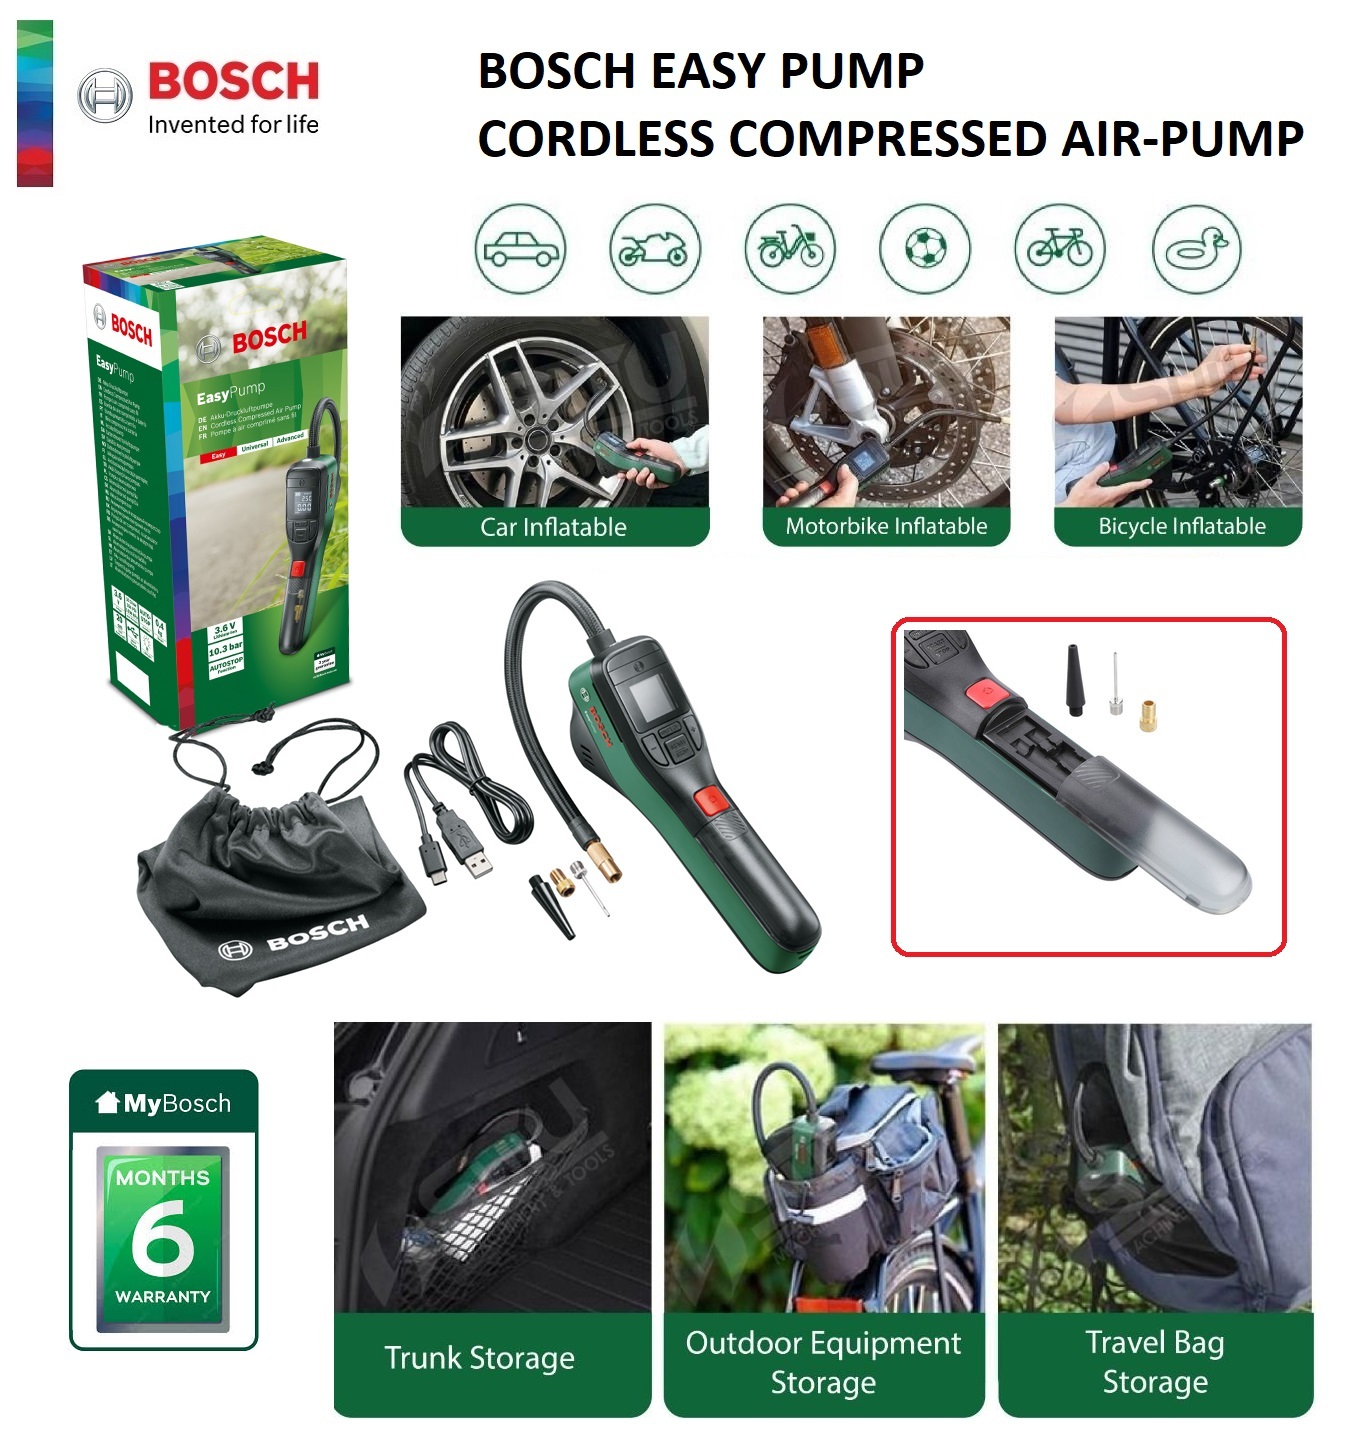 Review: Bosch Easypump Portable Air Compressor